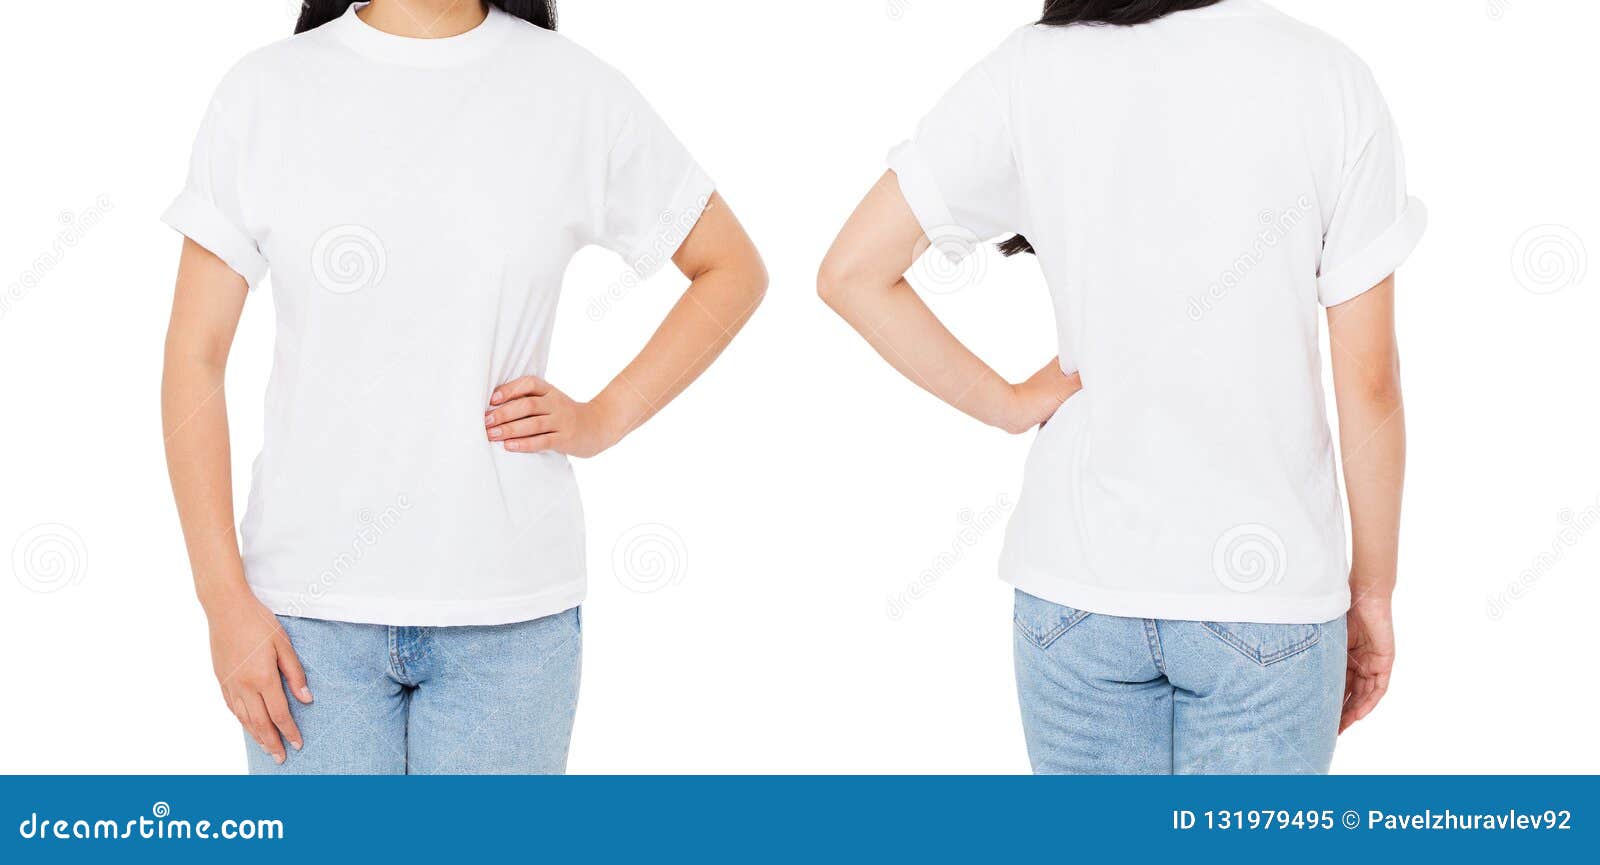 plain white female t shirt front and back